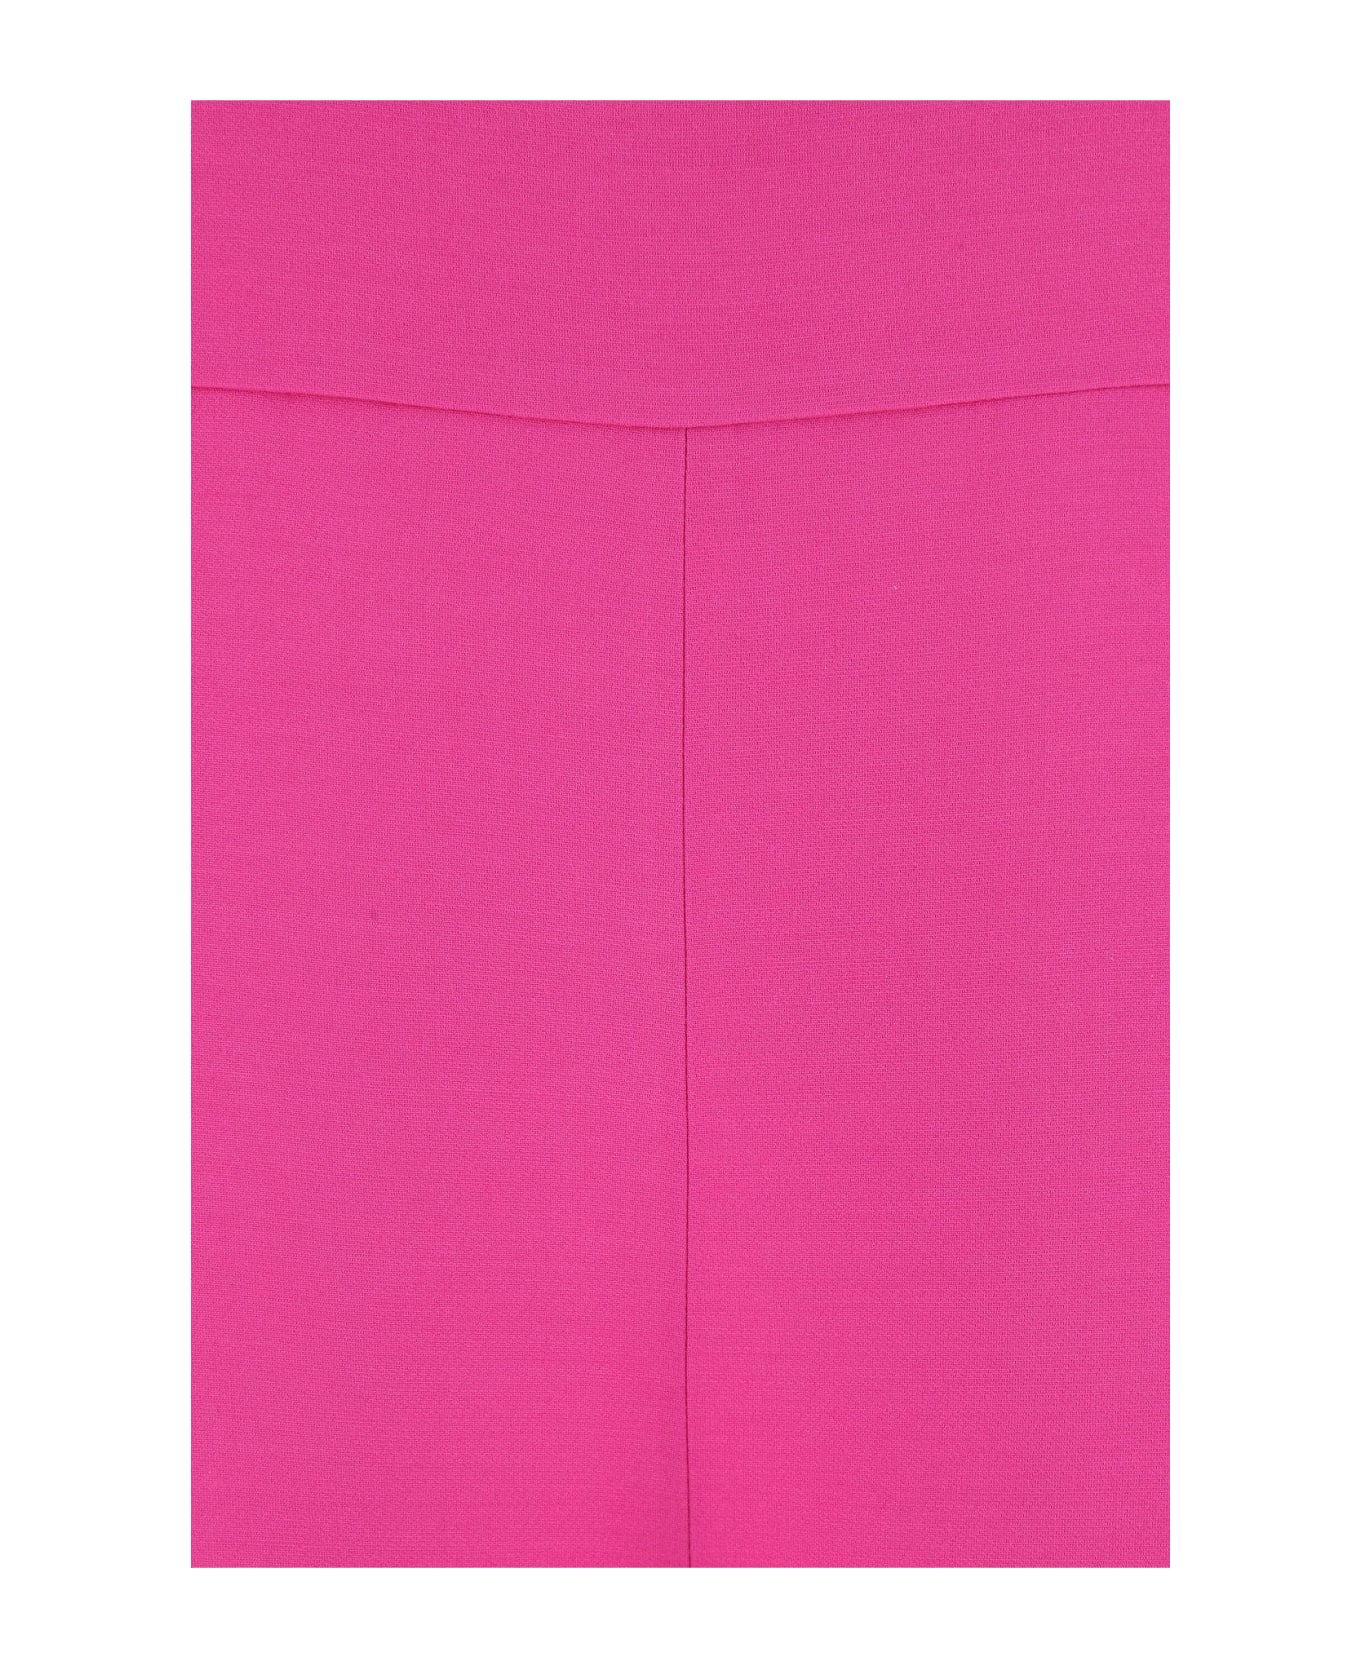 Valentino Pink Pp Wool Blend Jumpsuit - Fuchsia